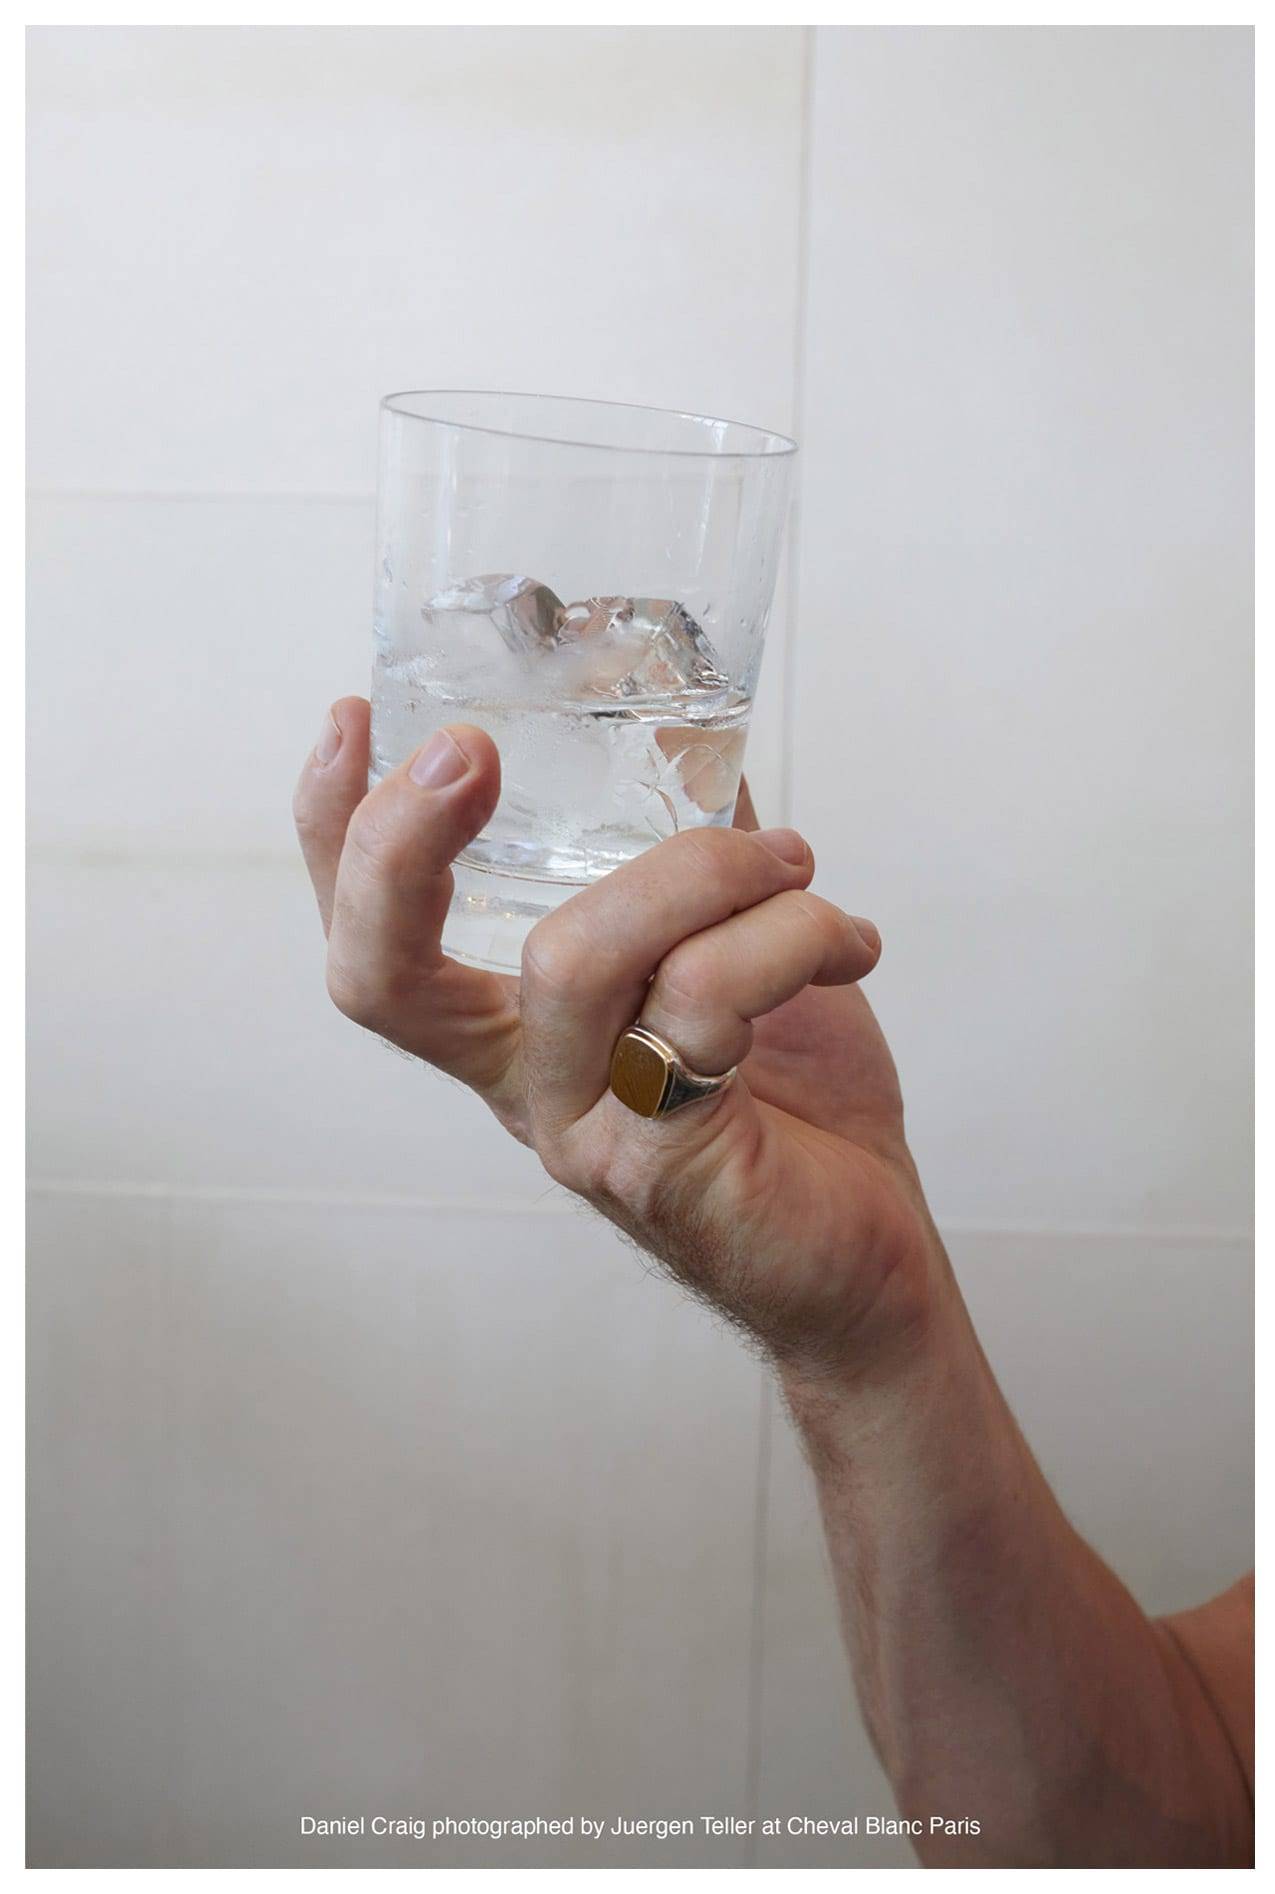 Daniel Craig holding a glass